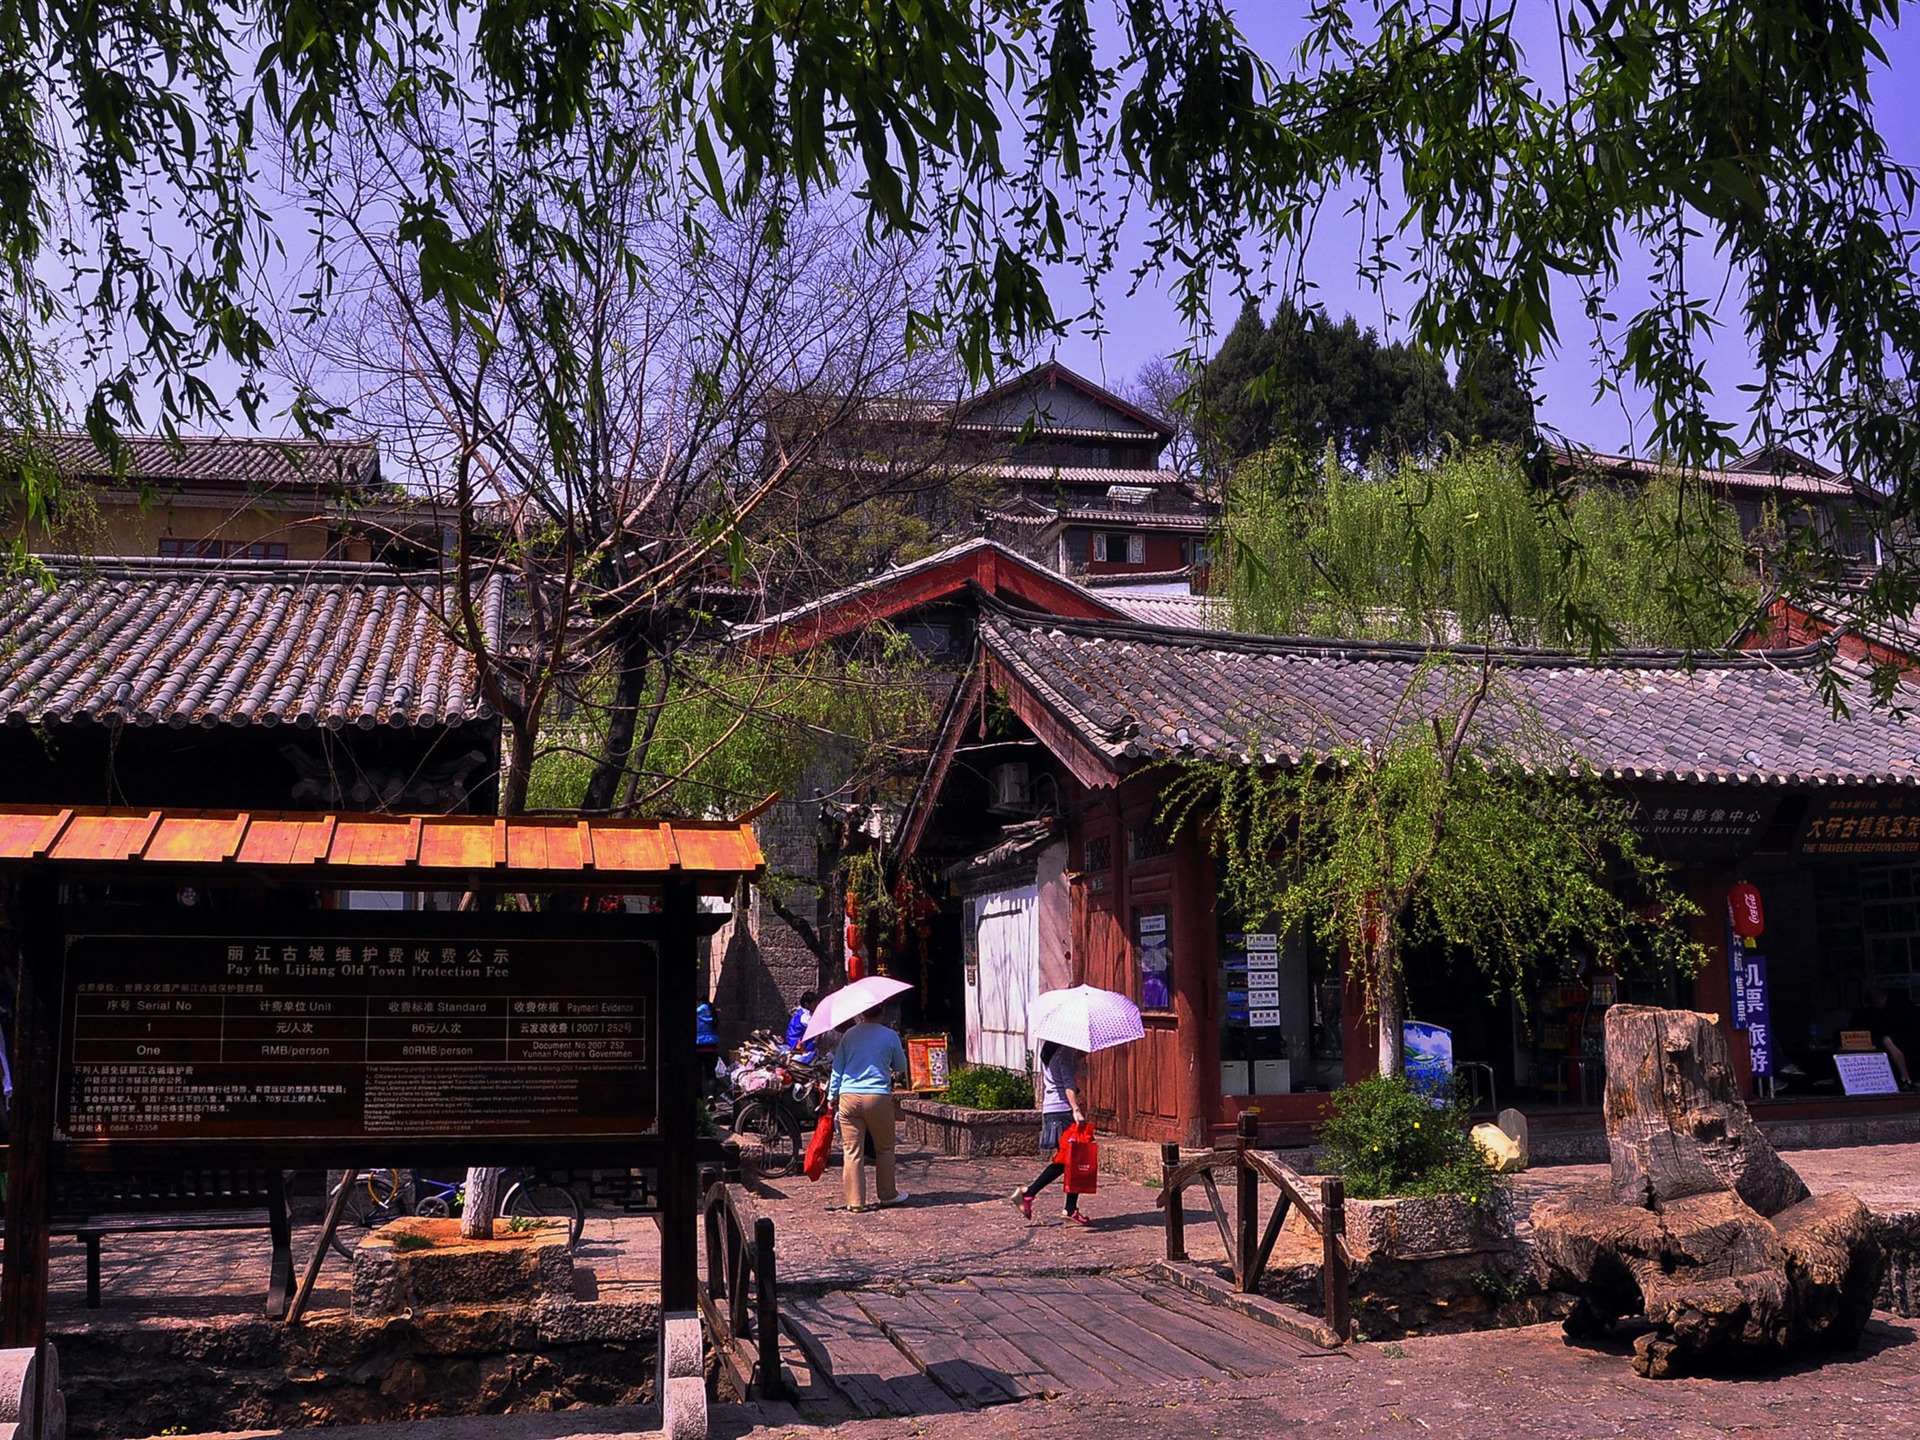 Lijiang ancient town atmosphere (2) (old Hong OK works) #26 - 1920x1440